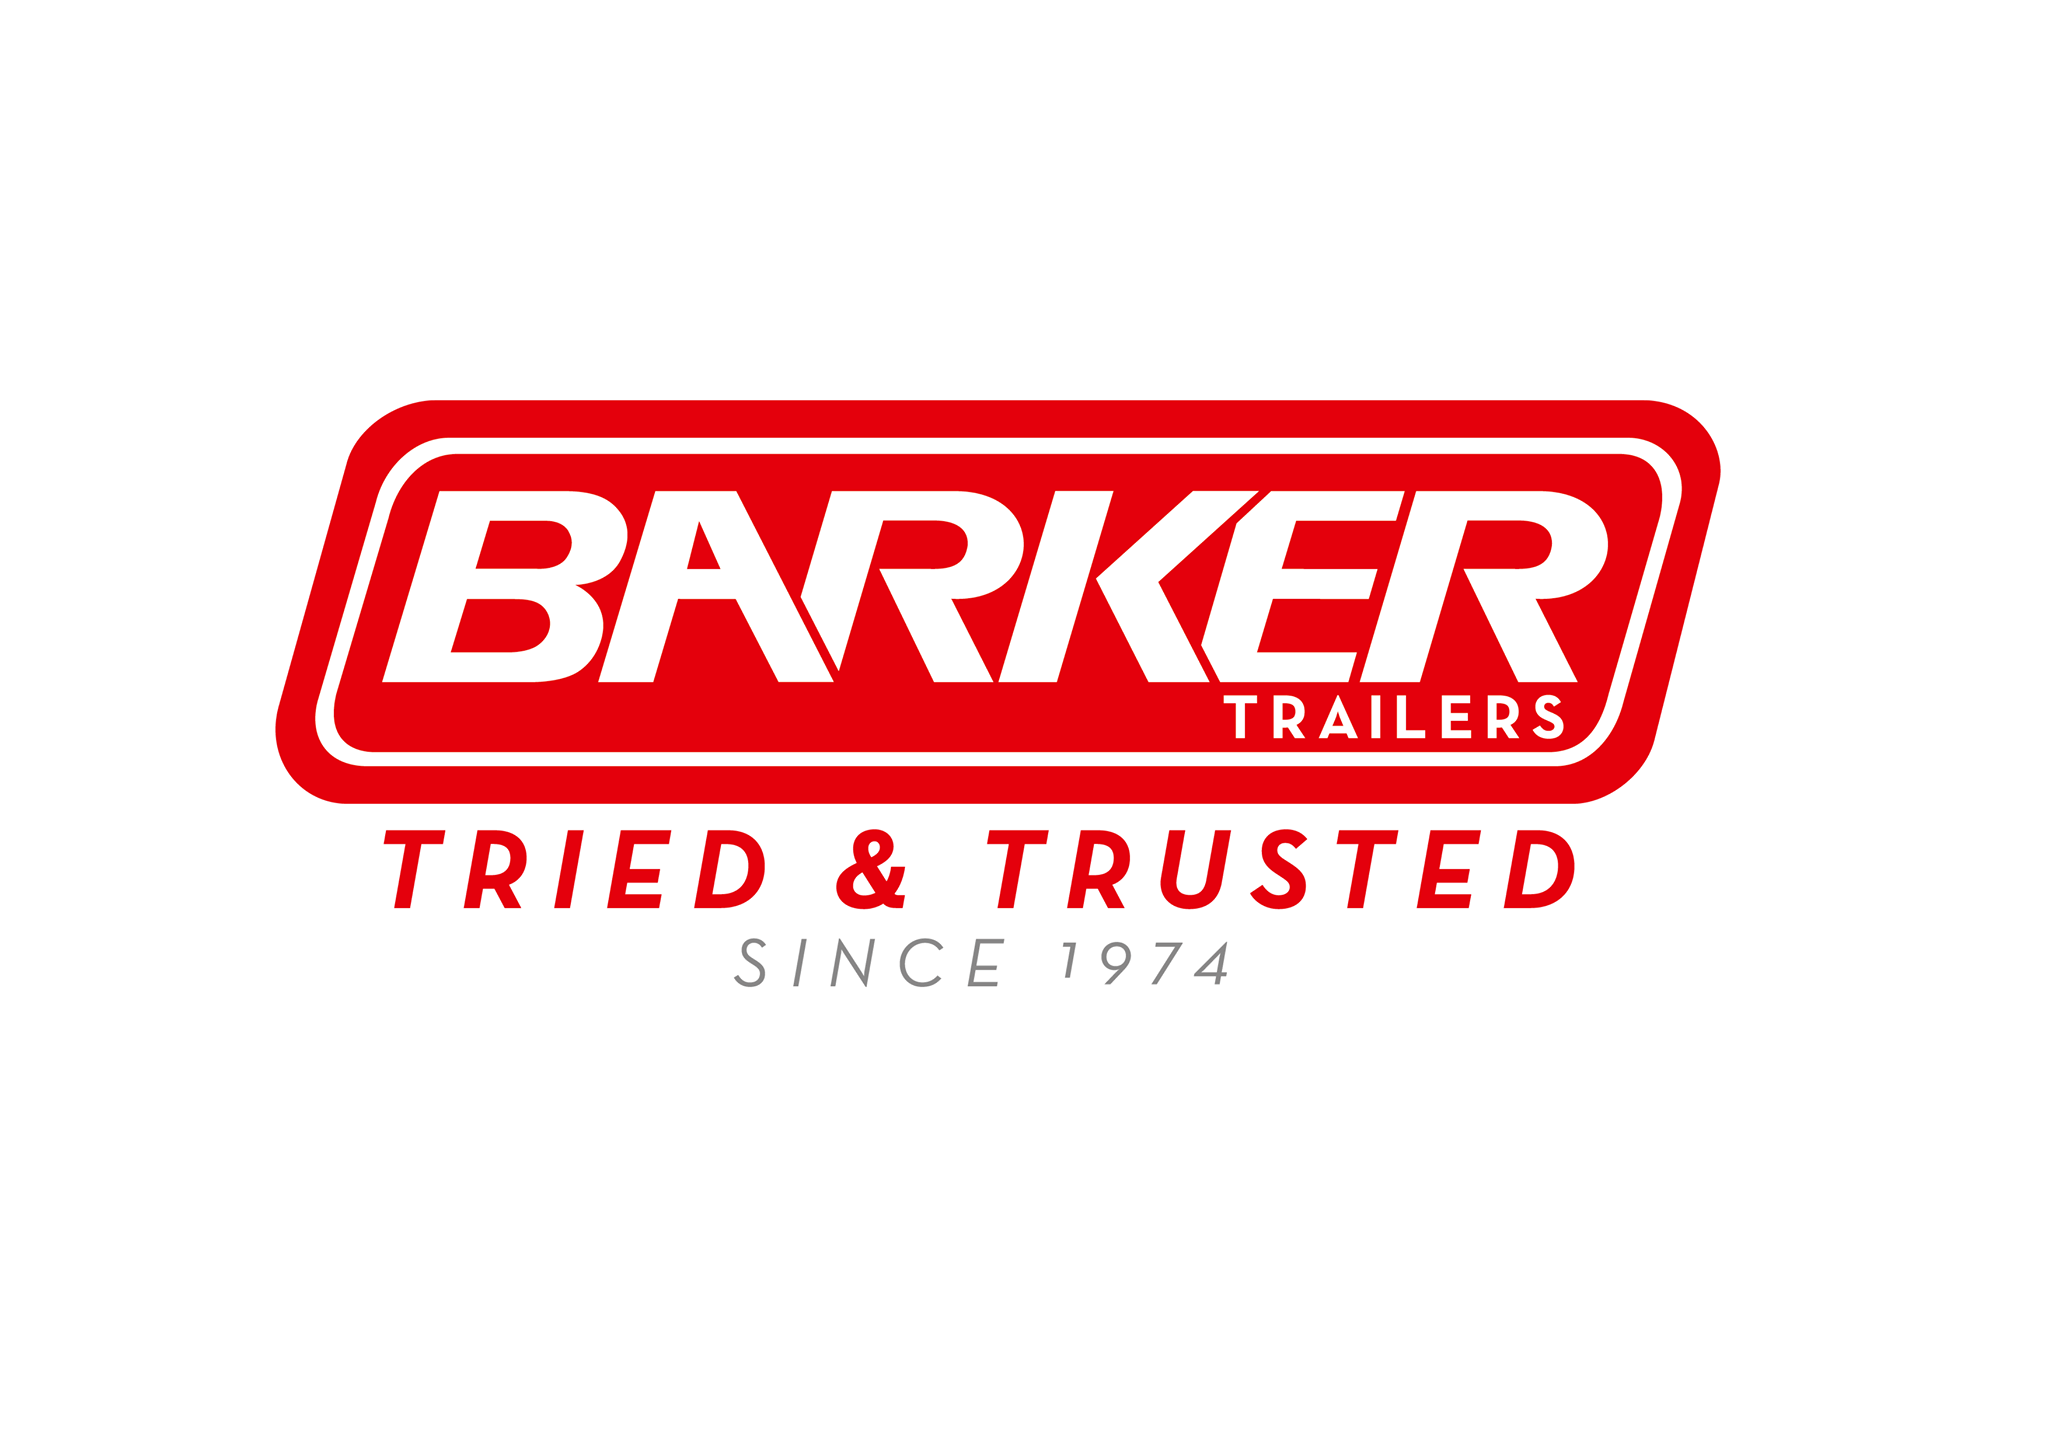 Company logo of Barker Trailers